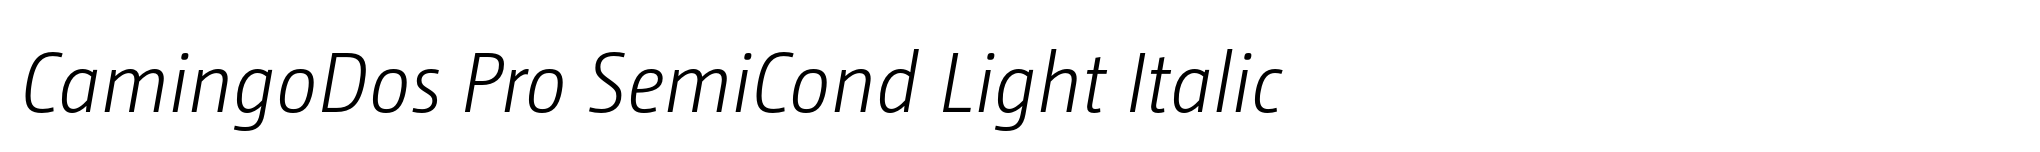 CamingoDos Pro SemiCond Light Italic image